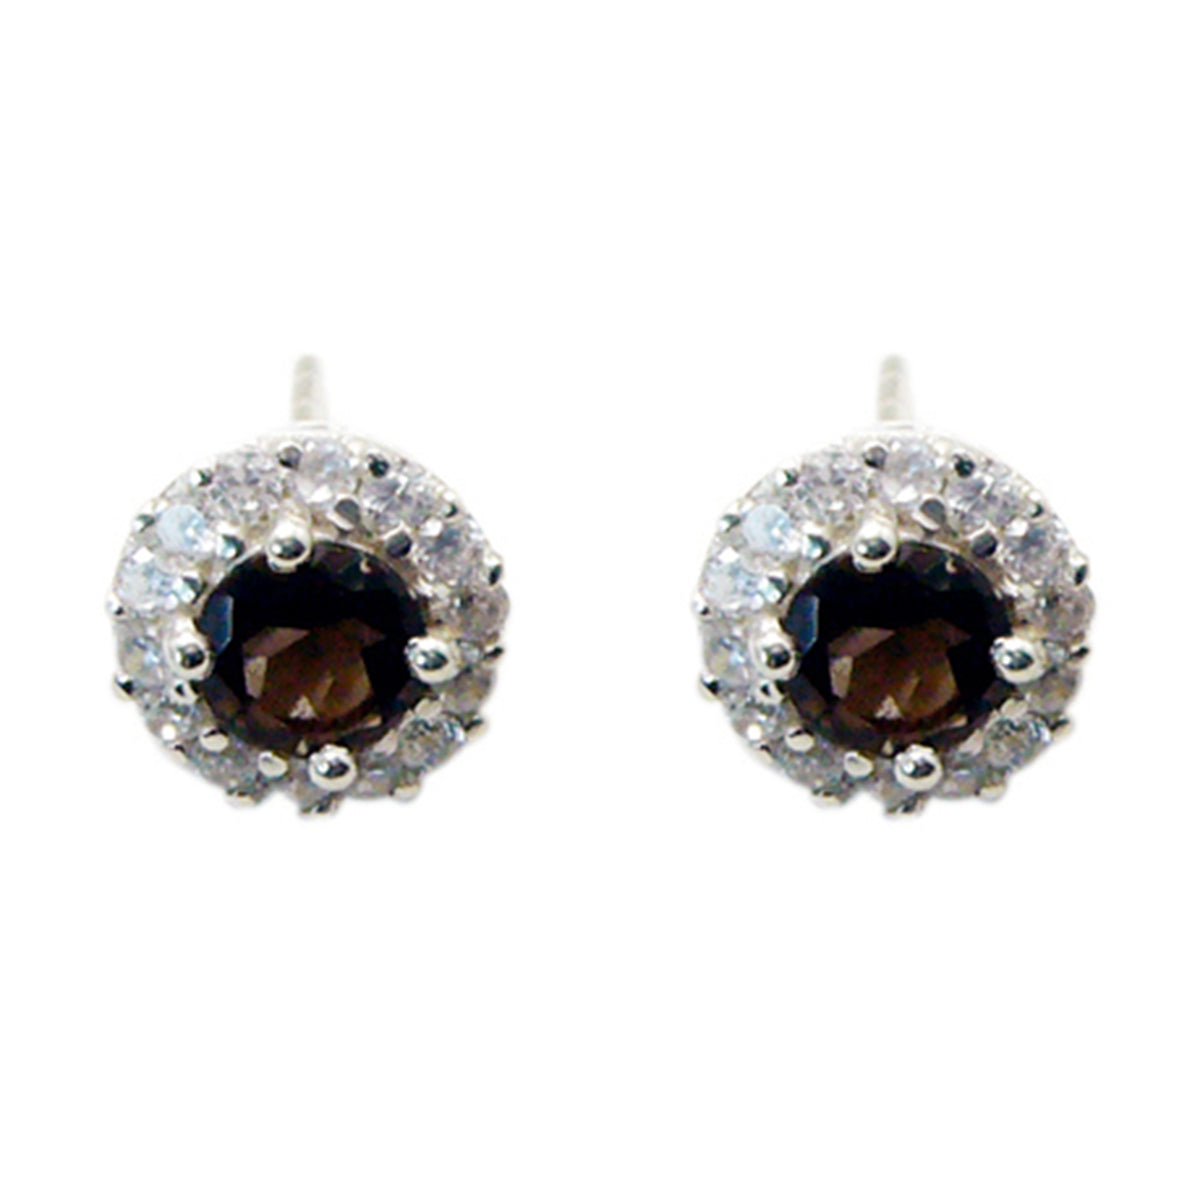 Riyo Good Gemstones round Faceted Brown Smokey Quartz Silver Earring valentine's day gift